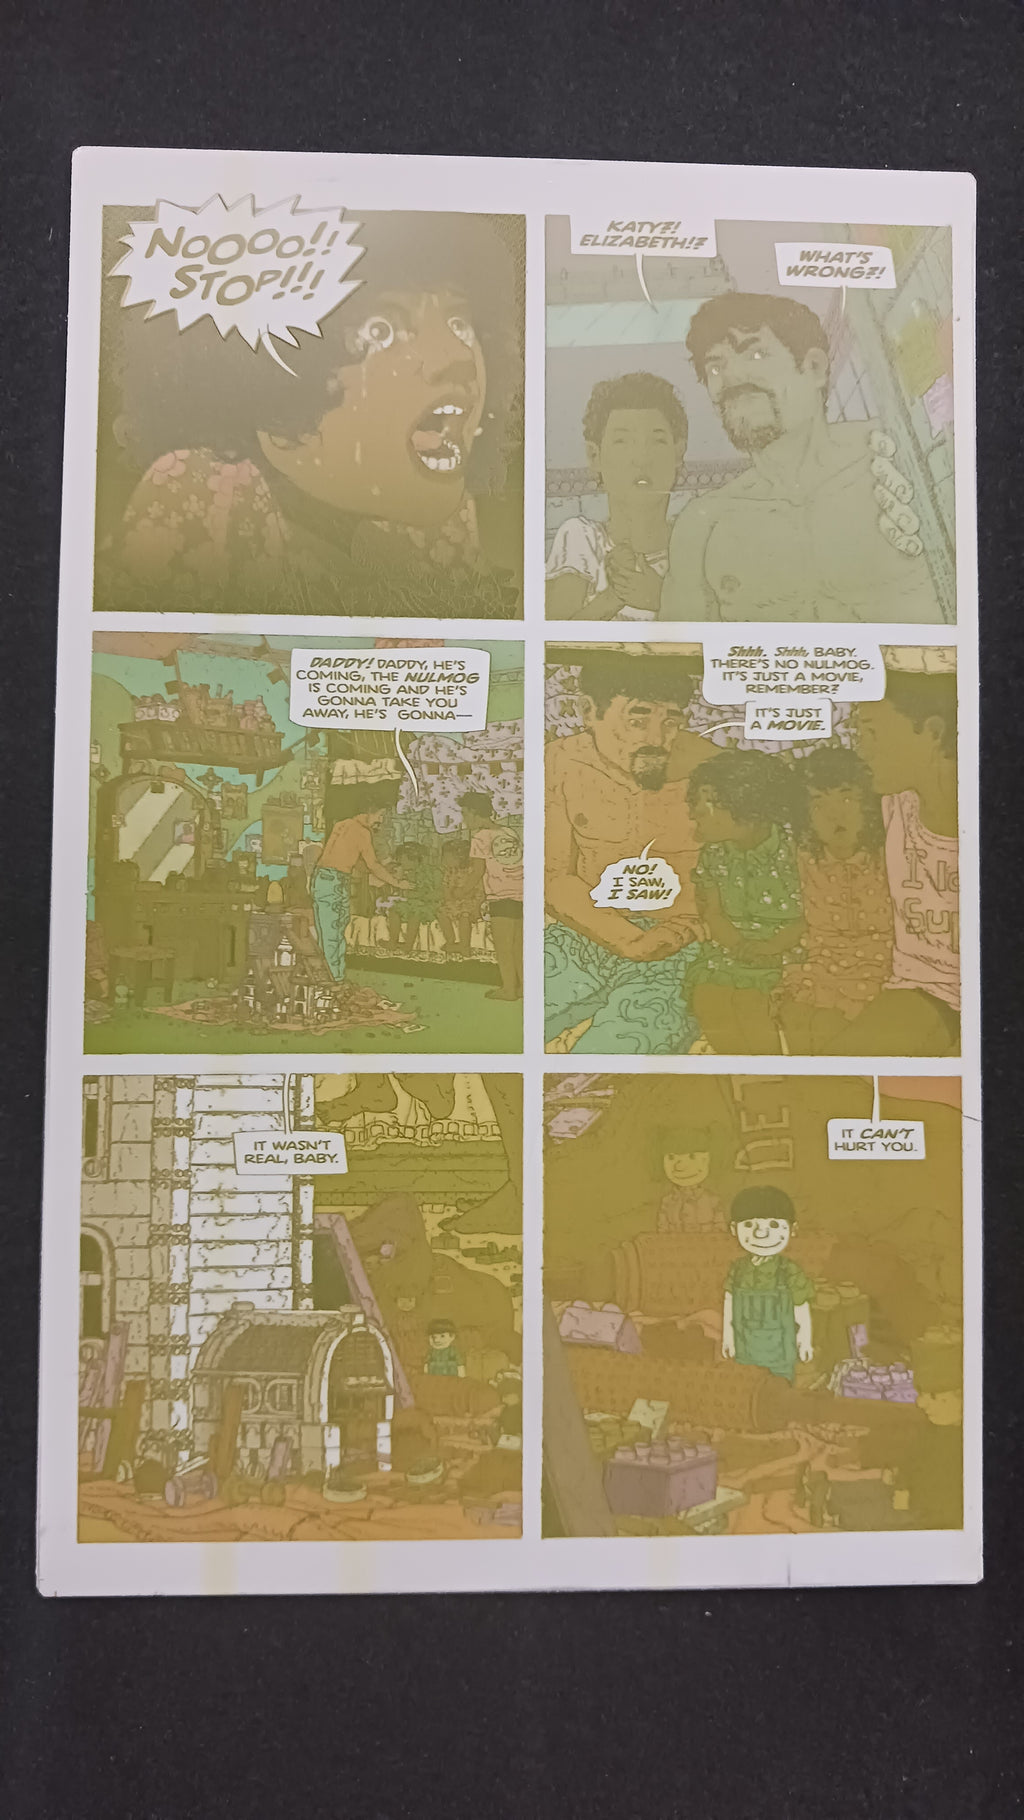 Agent of W.O.R.L.D.E #2 - Page 18 - Yellow - Comic Printer Plate - PRESSWORKS